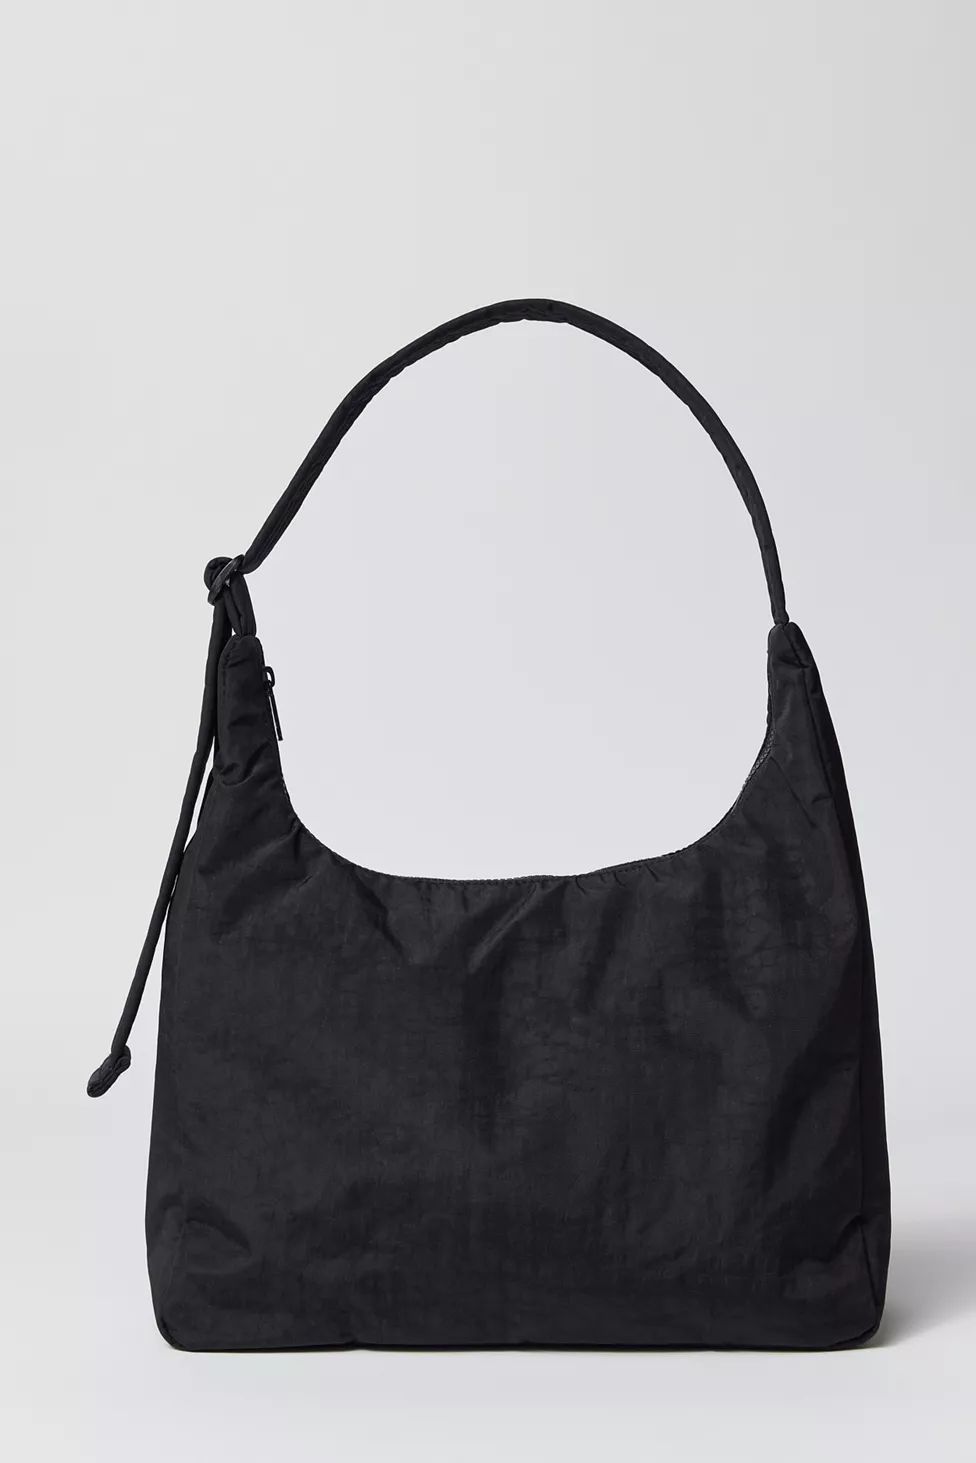 BAGGU Nylon Shoulder Bag | Urban Outfitters (US and RoW)